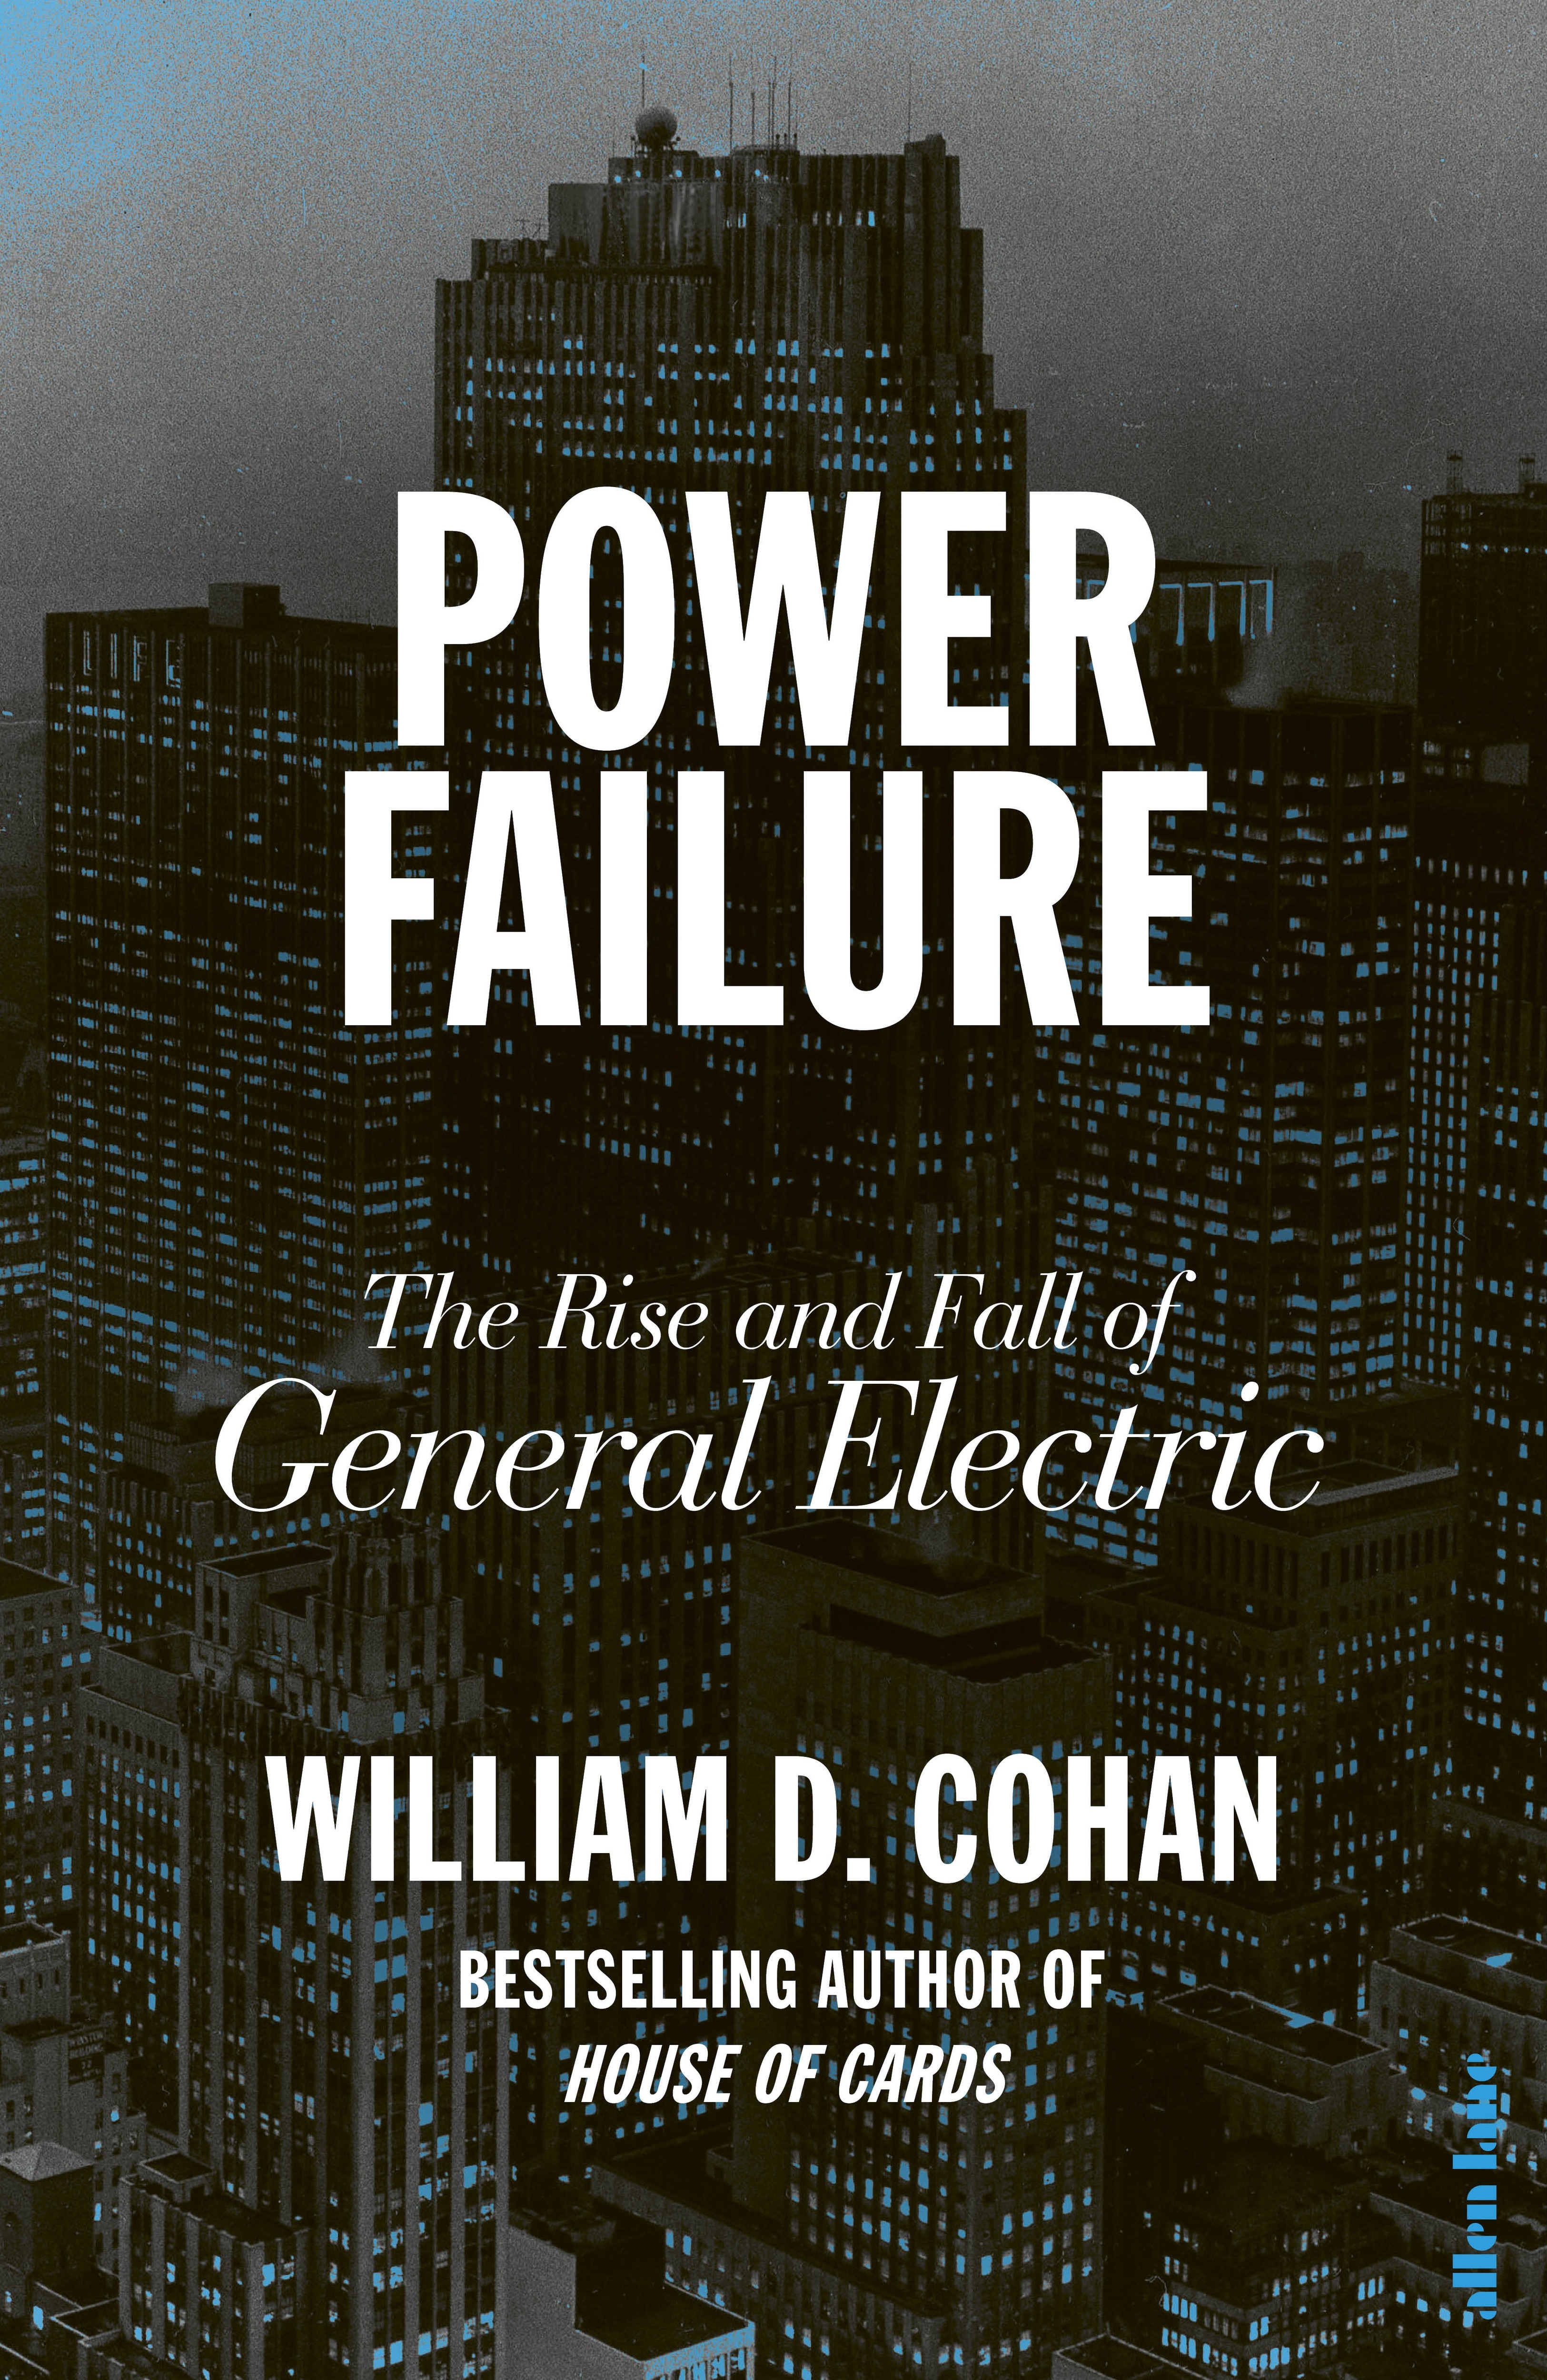 Book “Power Failure” by William D. Cohan — November 24, 2022